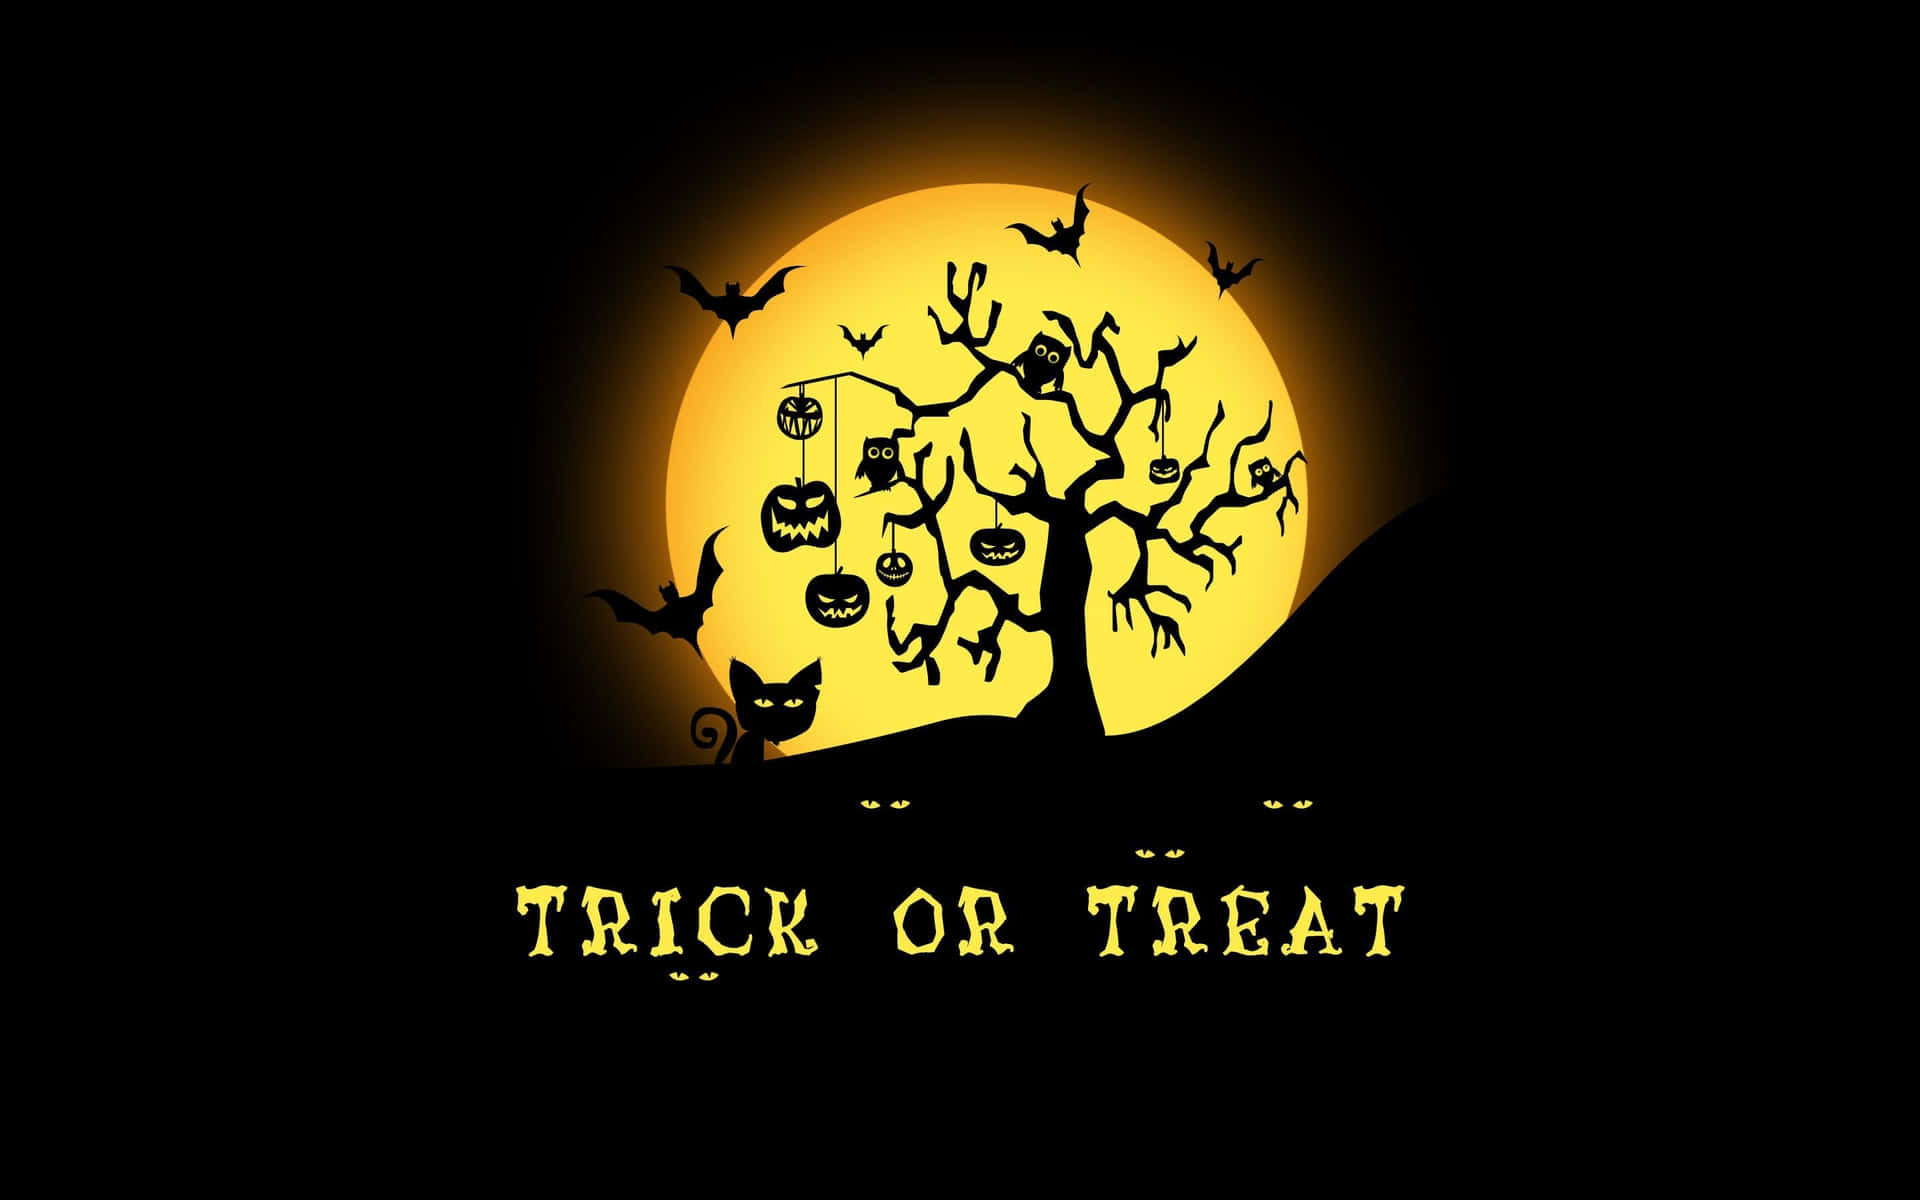 Prepare for a spooky night of ‘trick r treat’! Wallpaper